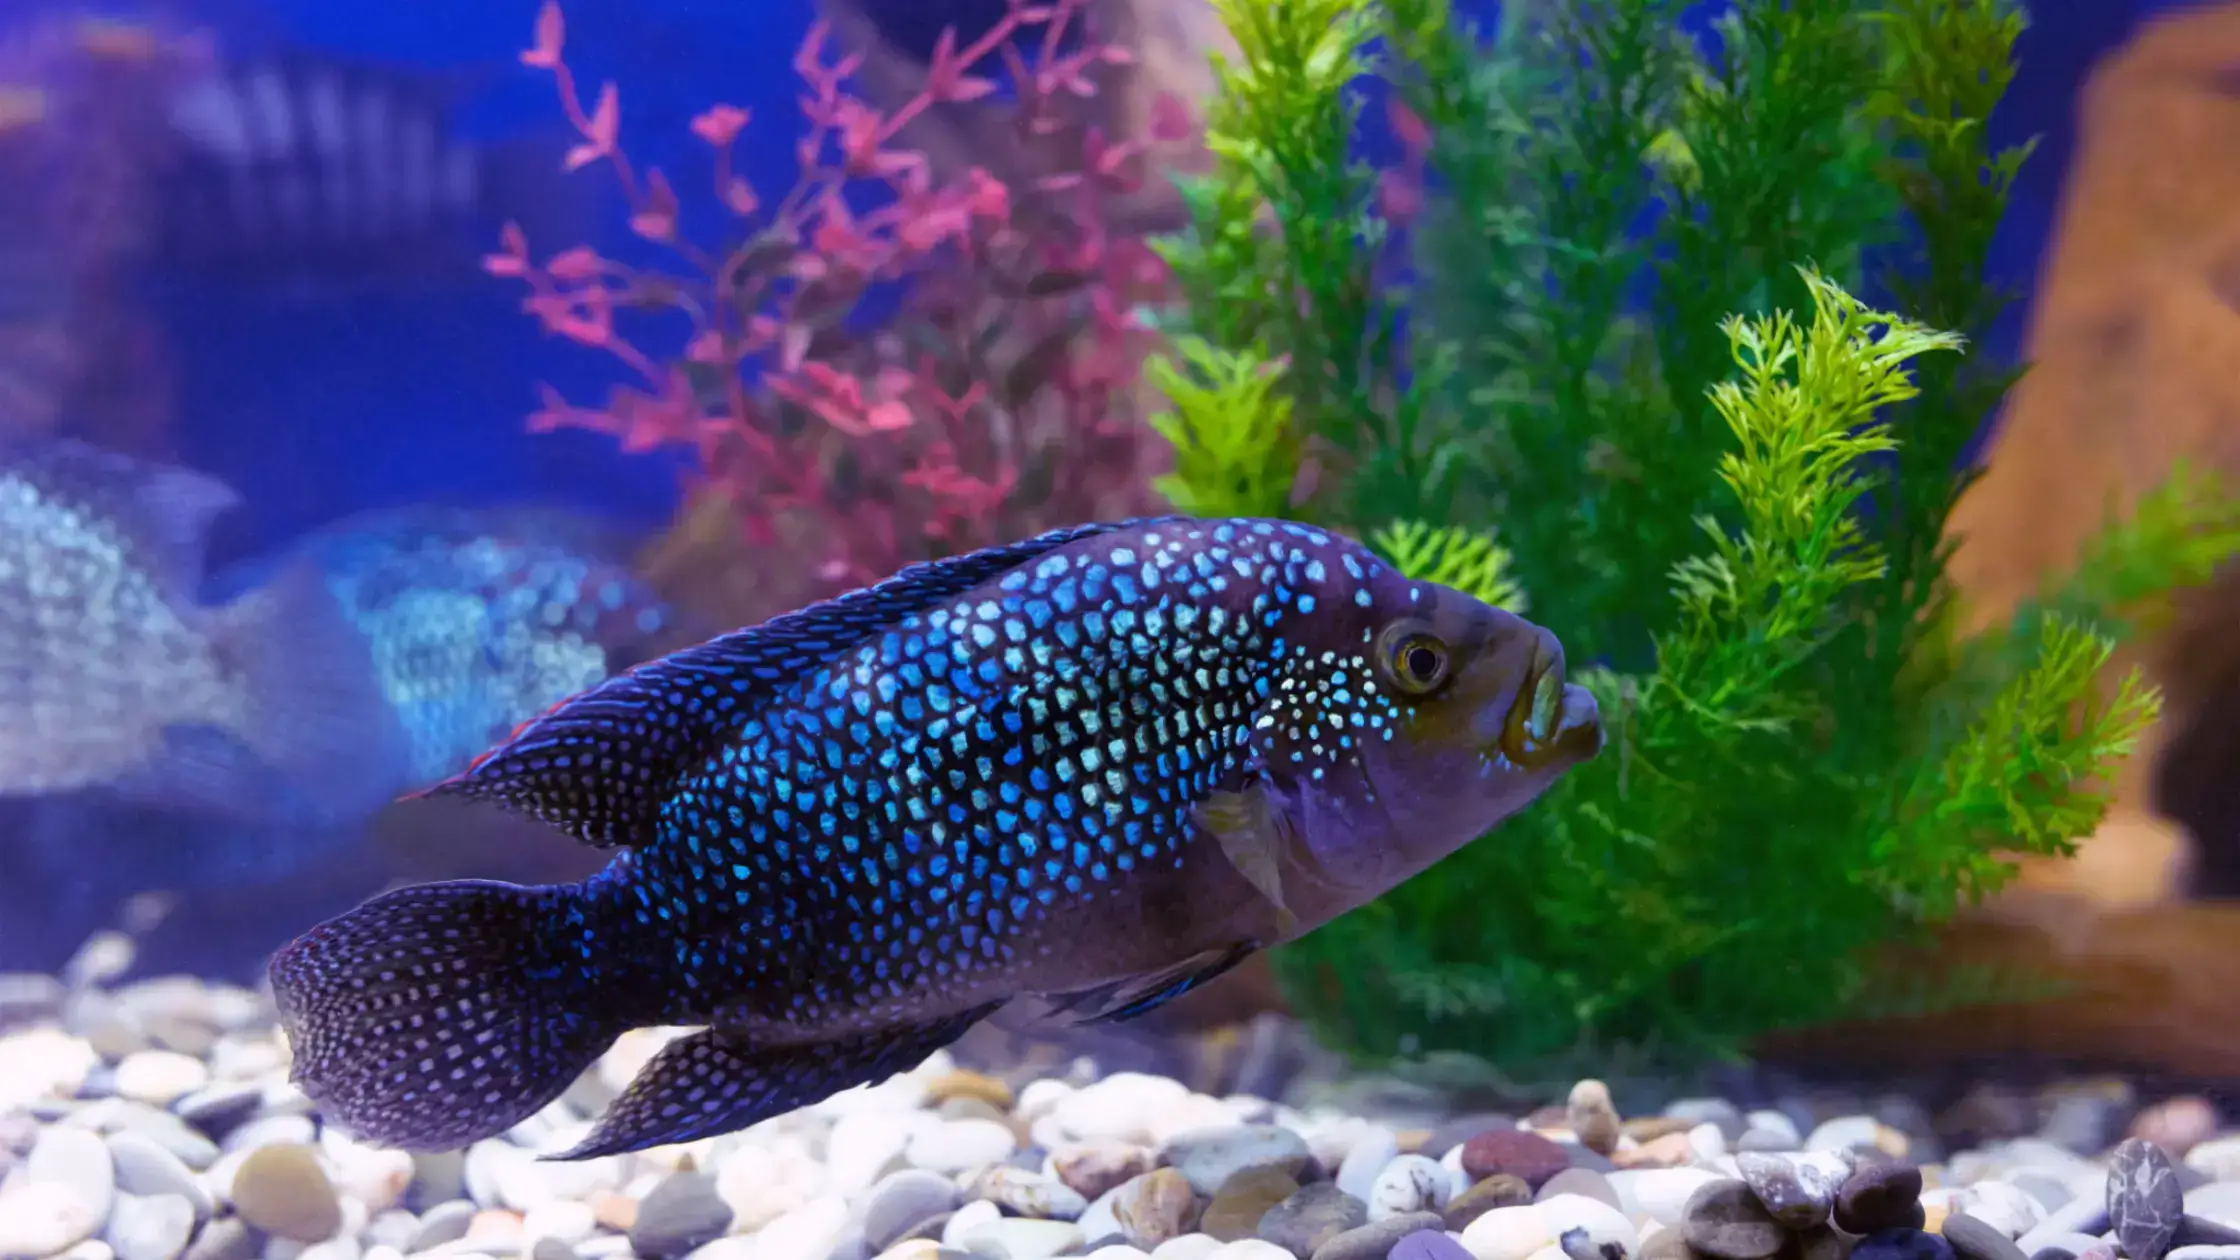 The Jack Dempsey Fish Popular Aquarium Choices